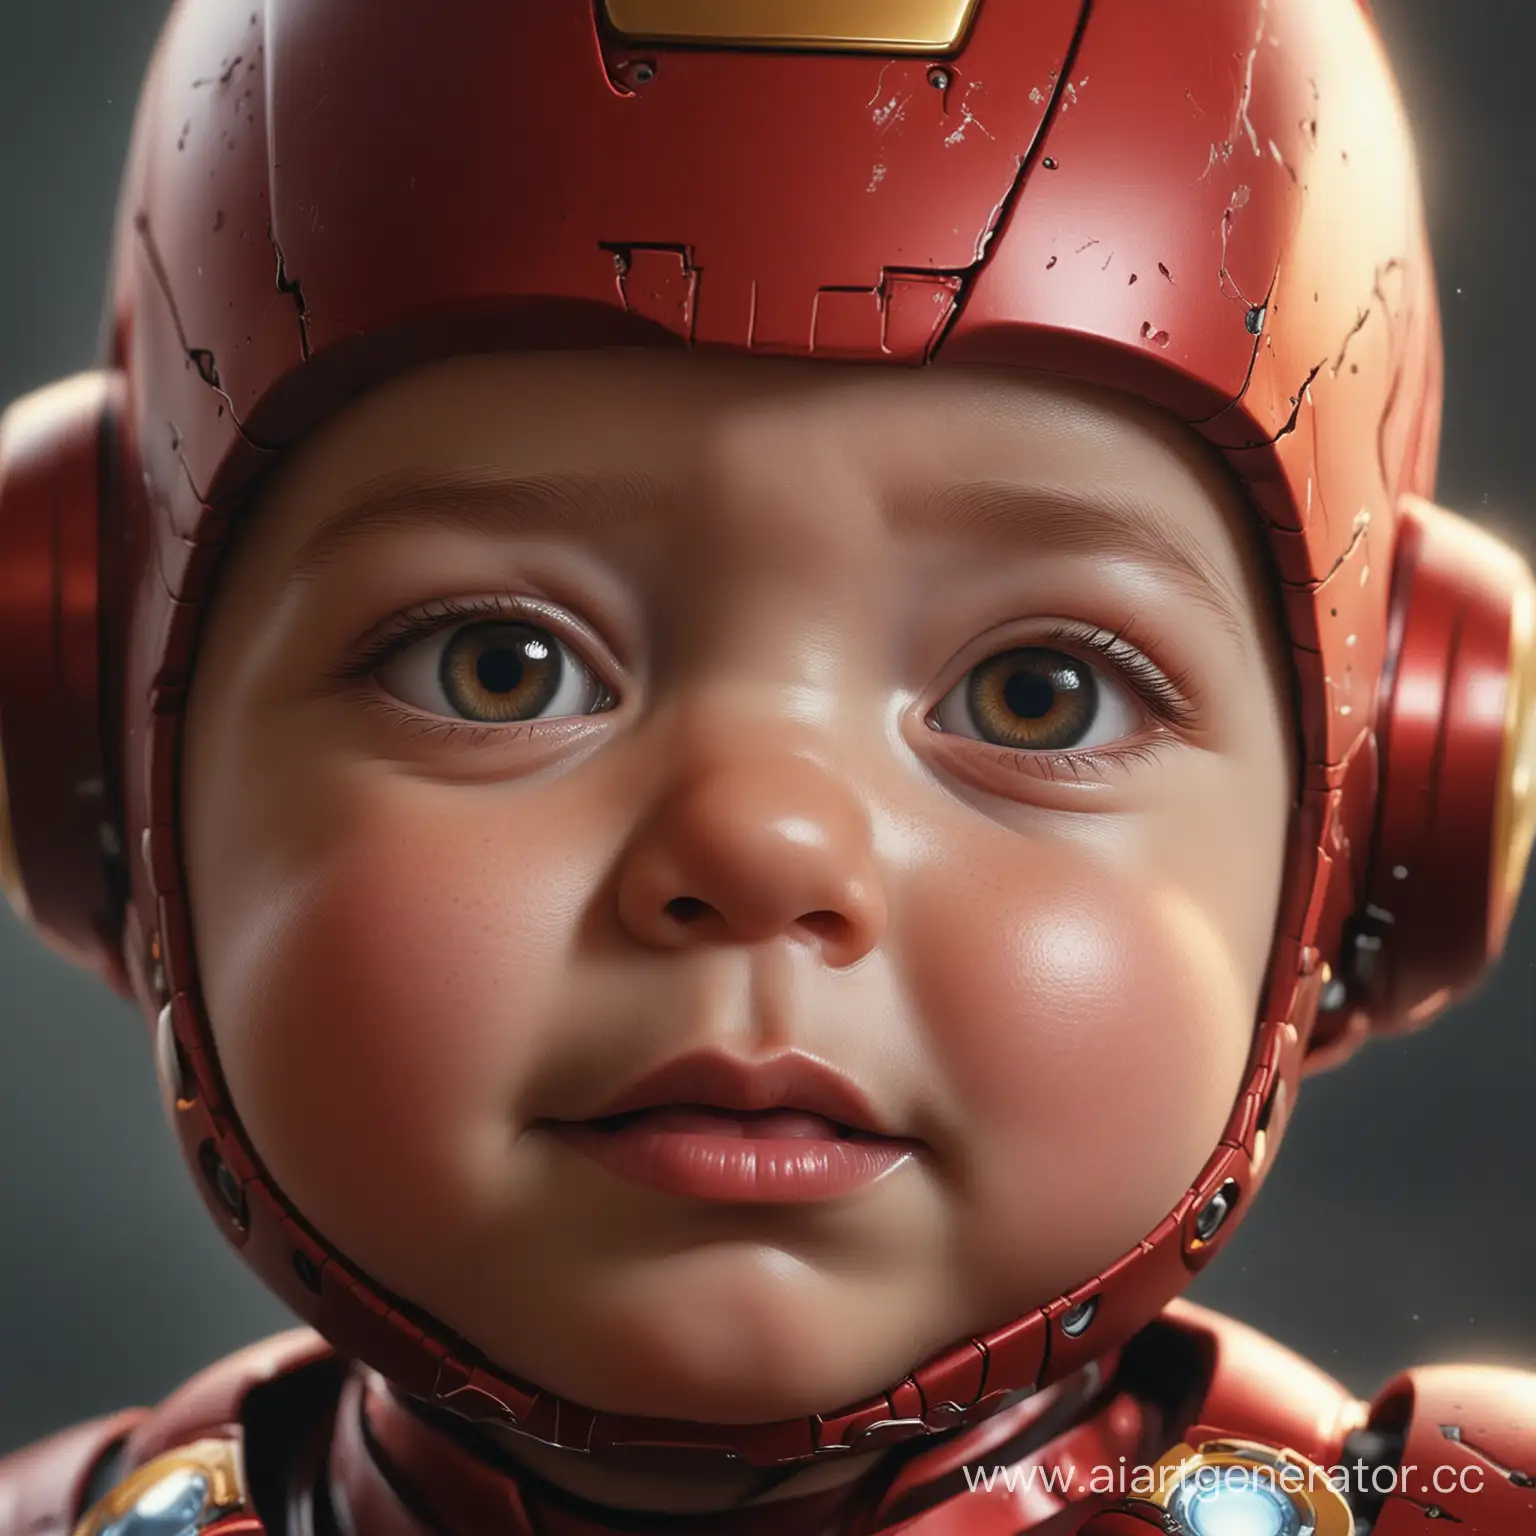 Innocent-Baby-in-Iron-Man-Costume-Photorealistic-Digital-Art-by-Marek-Okon